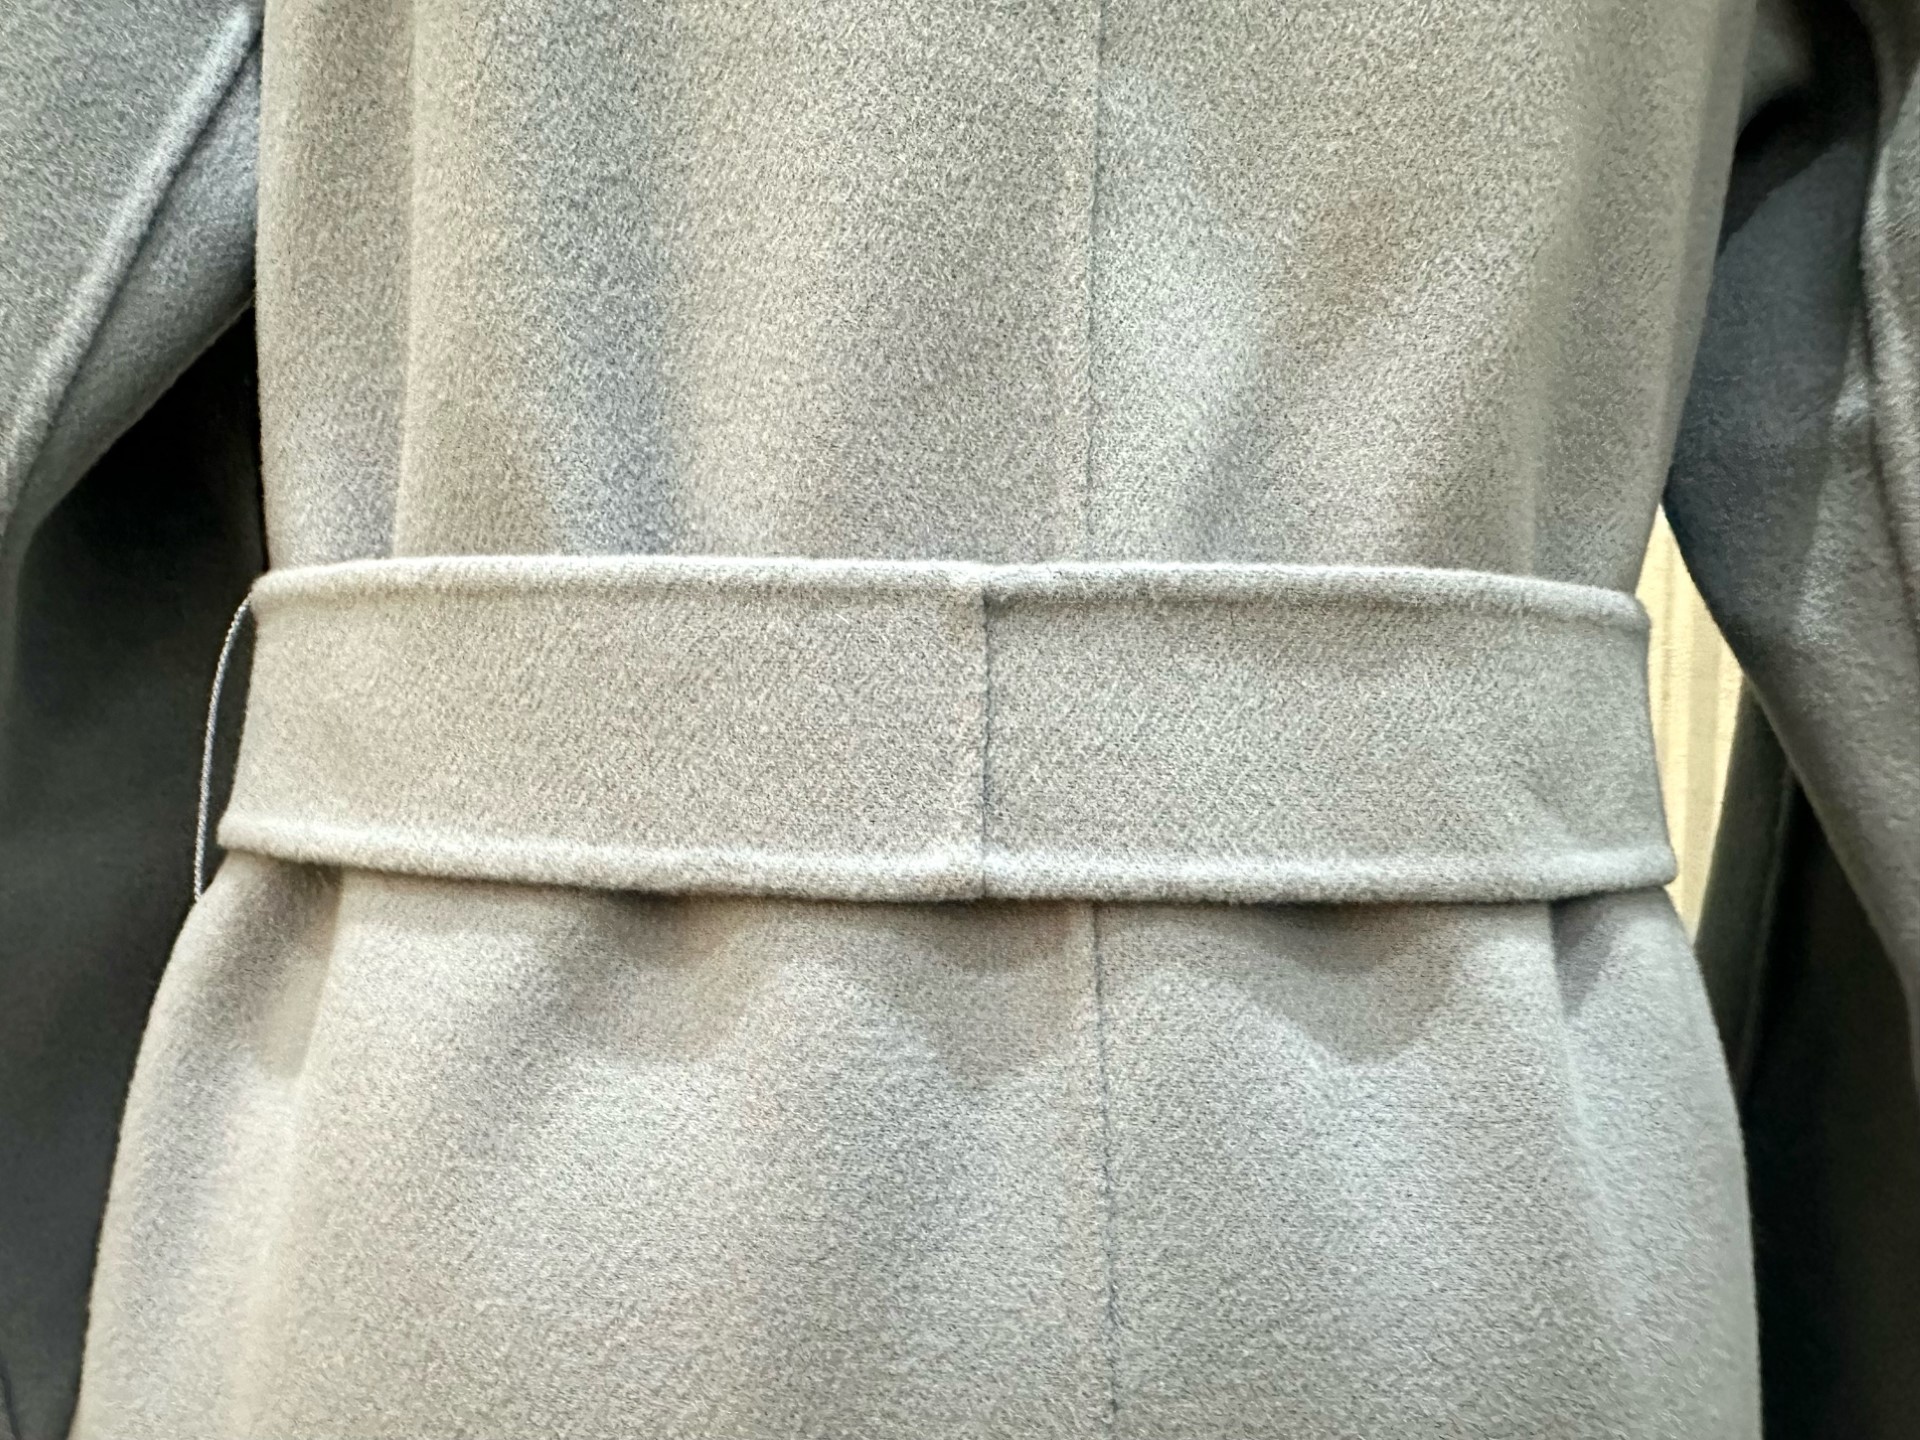 Max Mara Ladies Wrap Coat, pale blue, tie belt, pure new wool, Size 2 (small). In original box. - Image 4 of 5